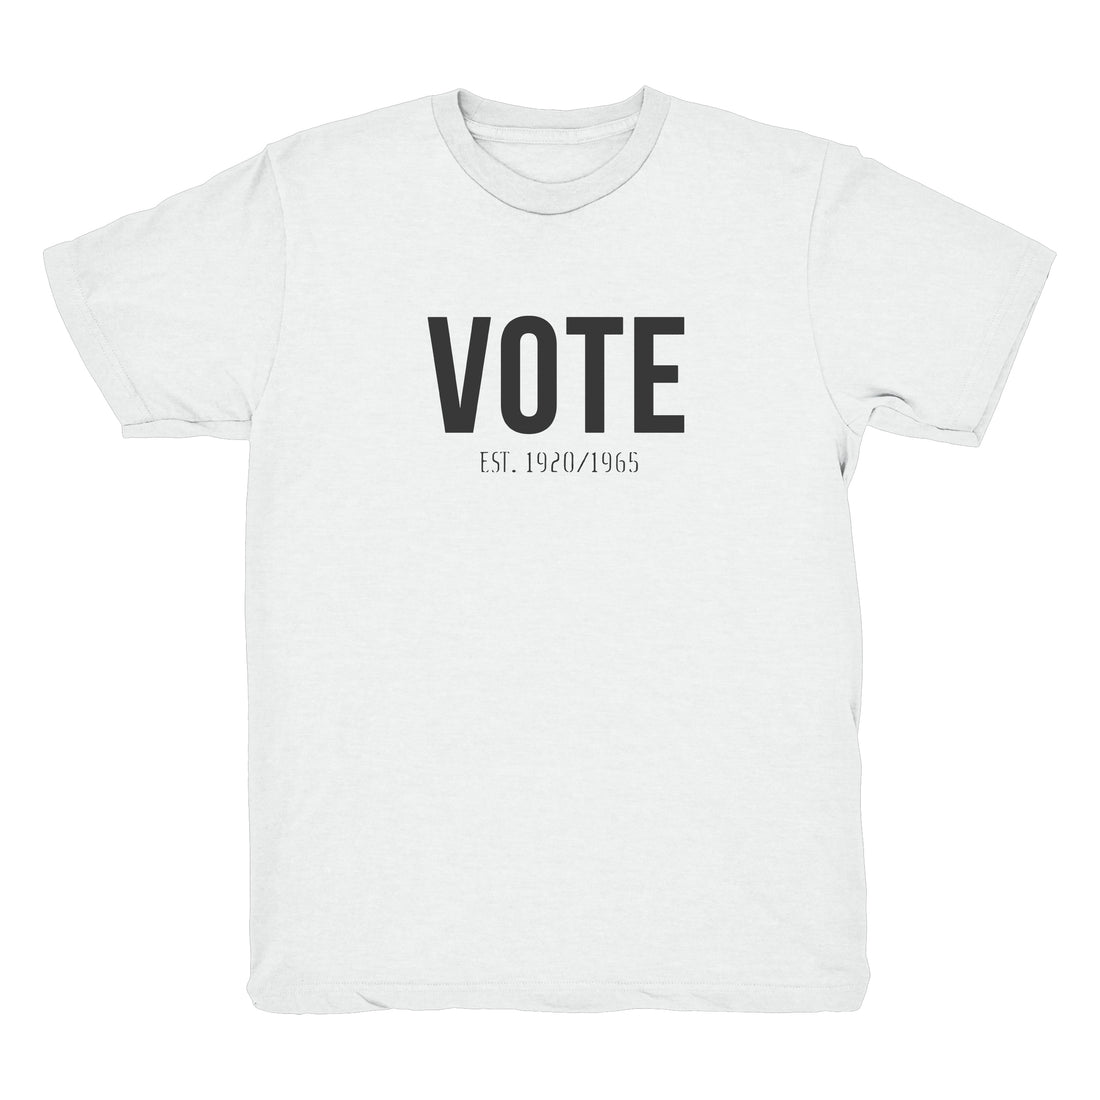 VOTE Toddler T-Shirt